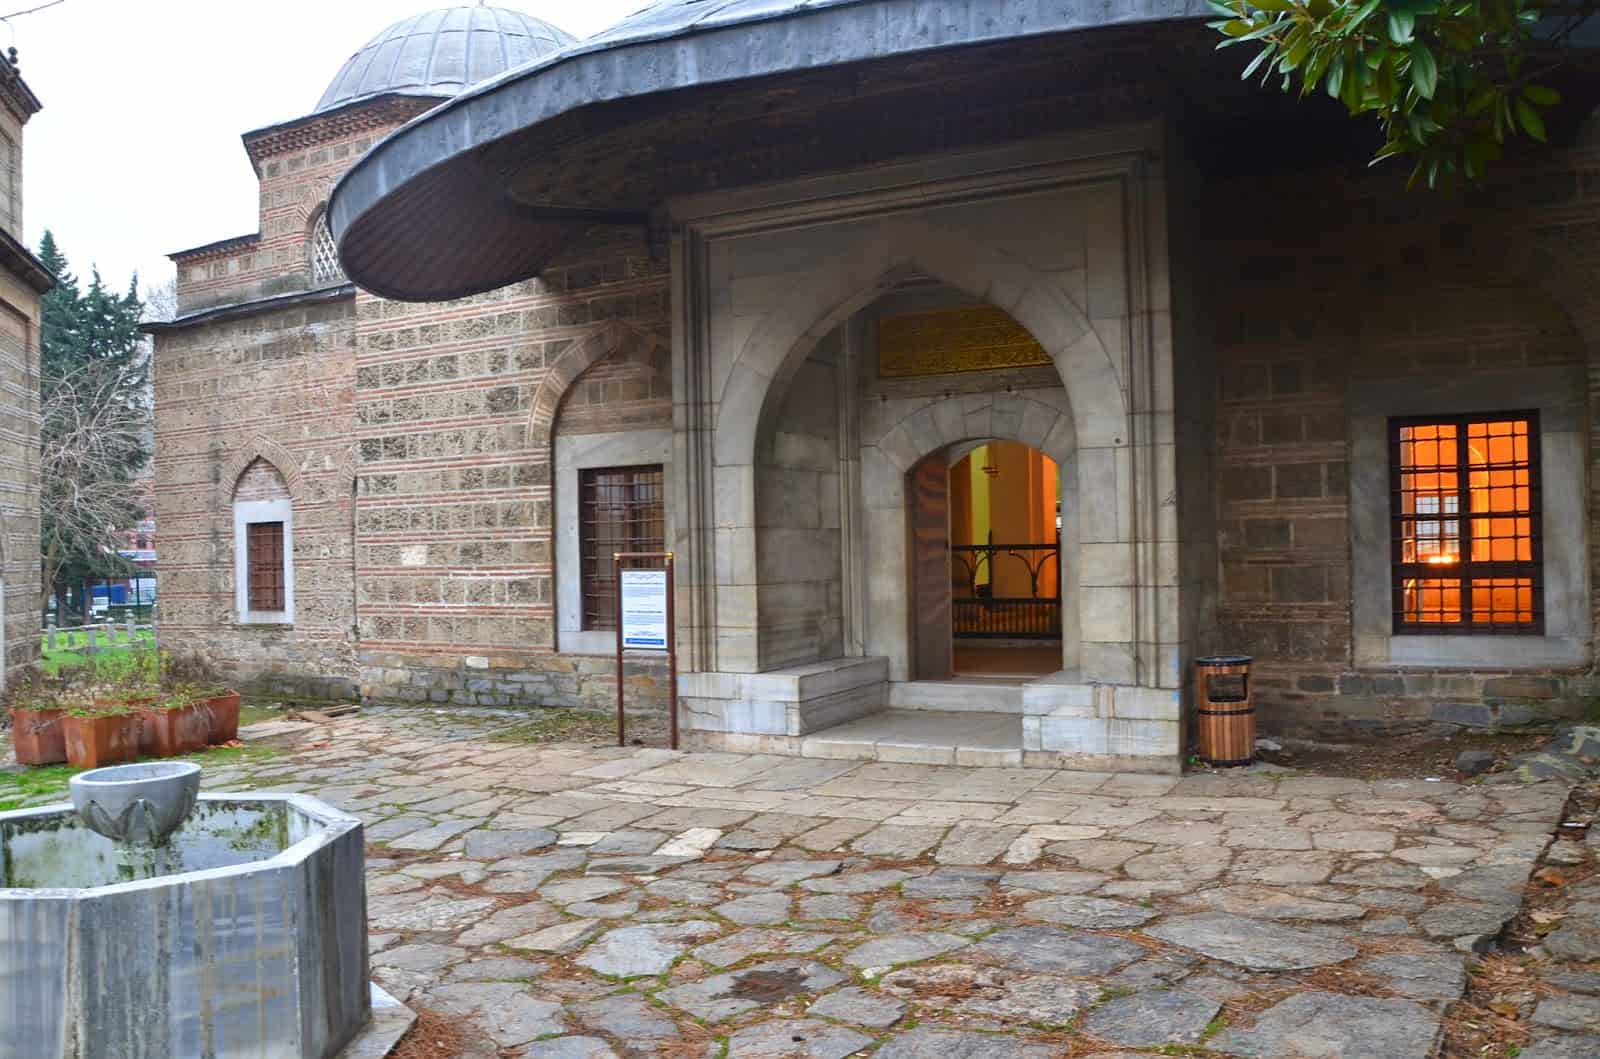 Tomb of Murad II in January 2013 at the Muradiye Complex in Bursa, Turkey